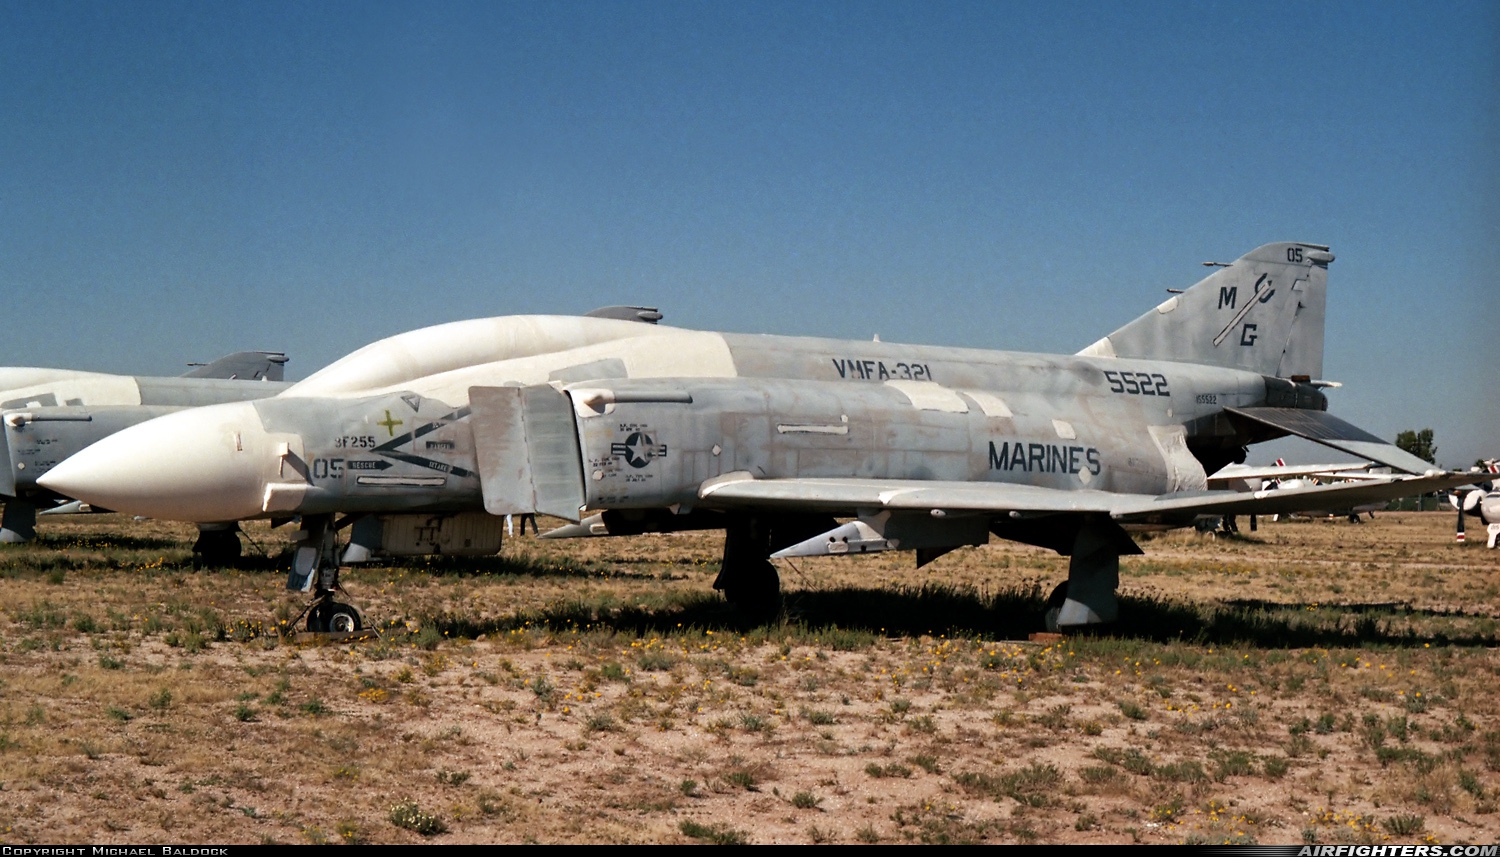 USA - Marines McDonnell Douglas F-4S Phantom II 155522 at Tucson - Davis-Monthan AFB (DMA / KDMA), USA